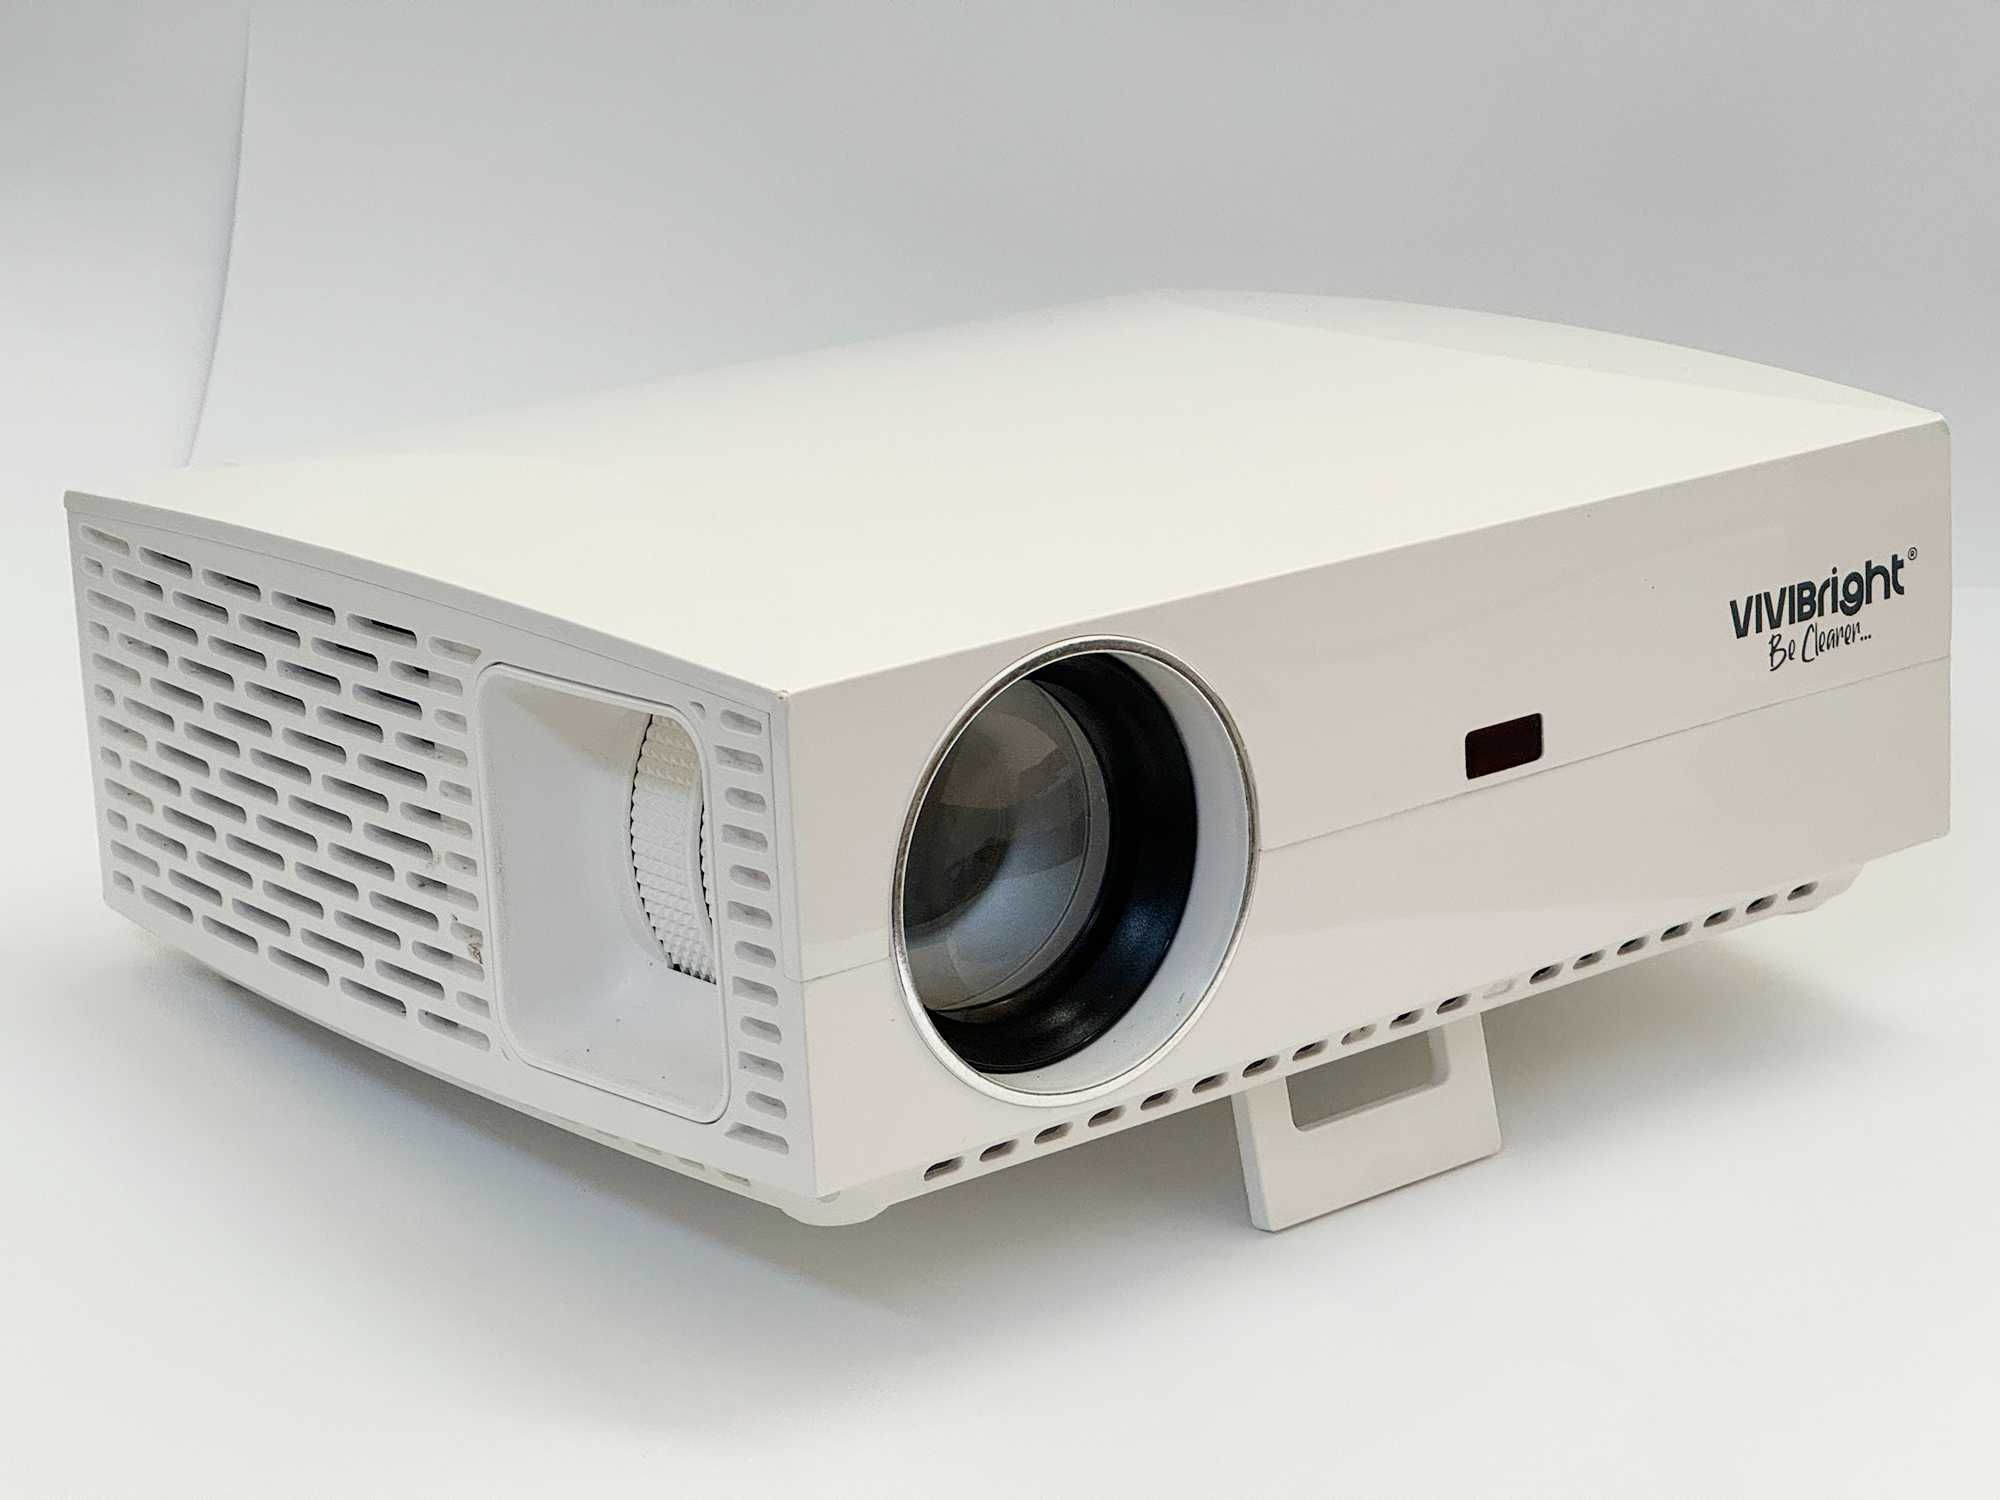 Videproiector Vivibright F30 cu screen mirroring, 1080p, home cinema